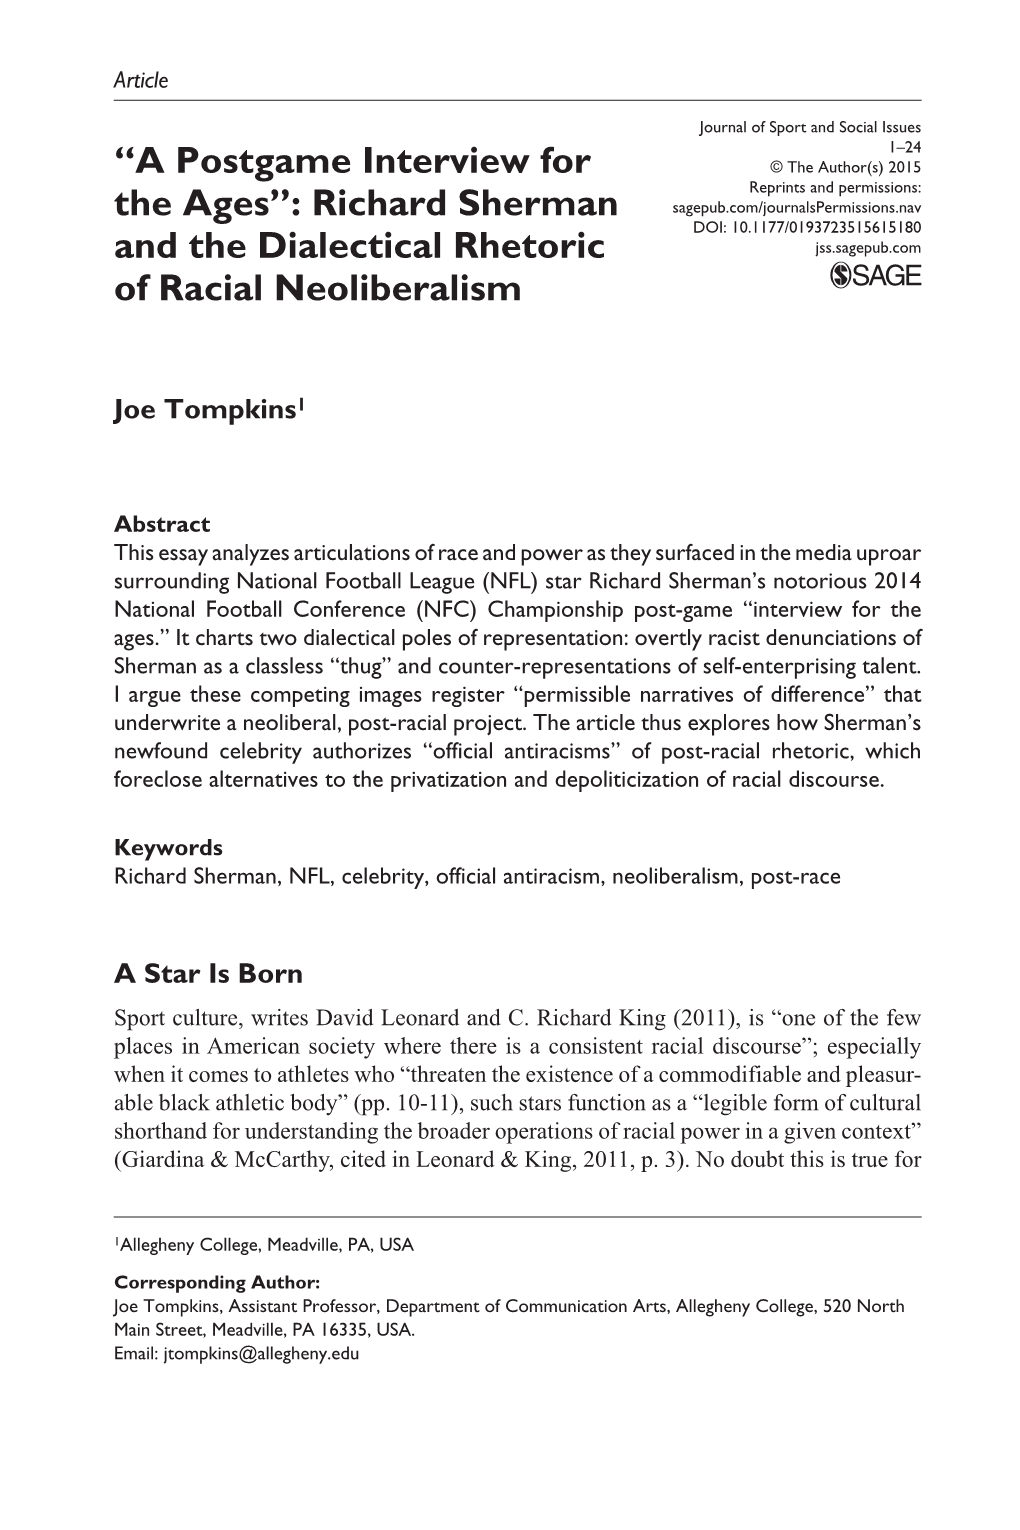 Richard Sherman and the Dialectical Rhetoric of Racial Neoliberalism